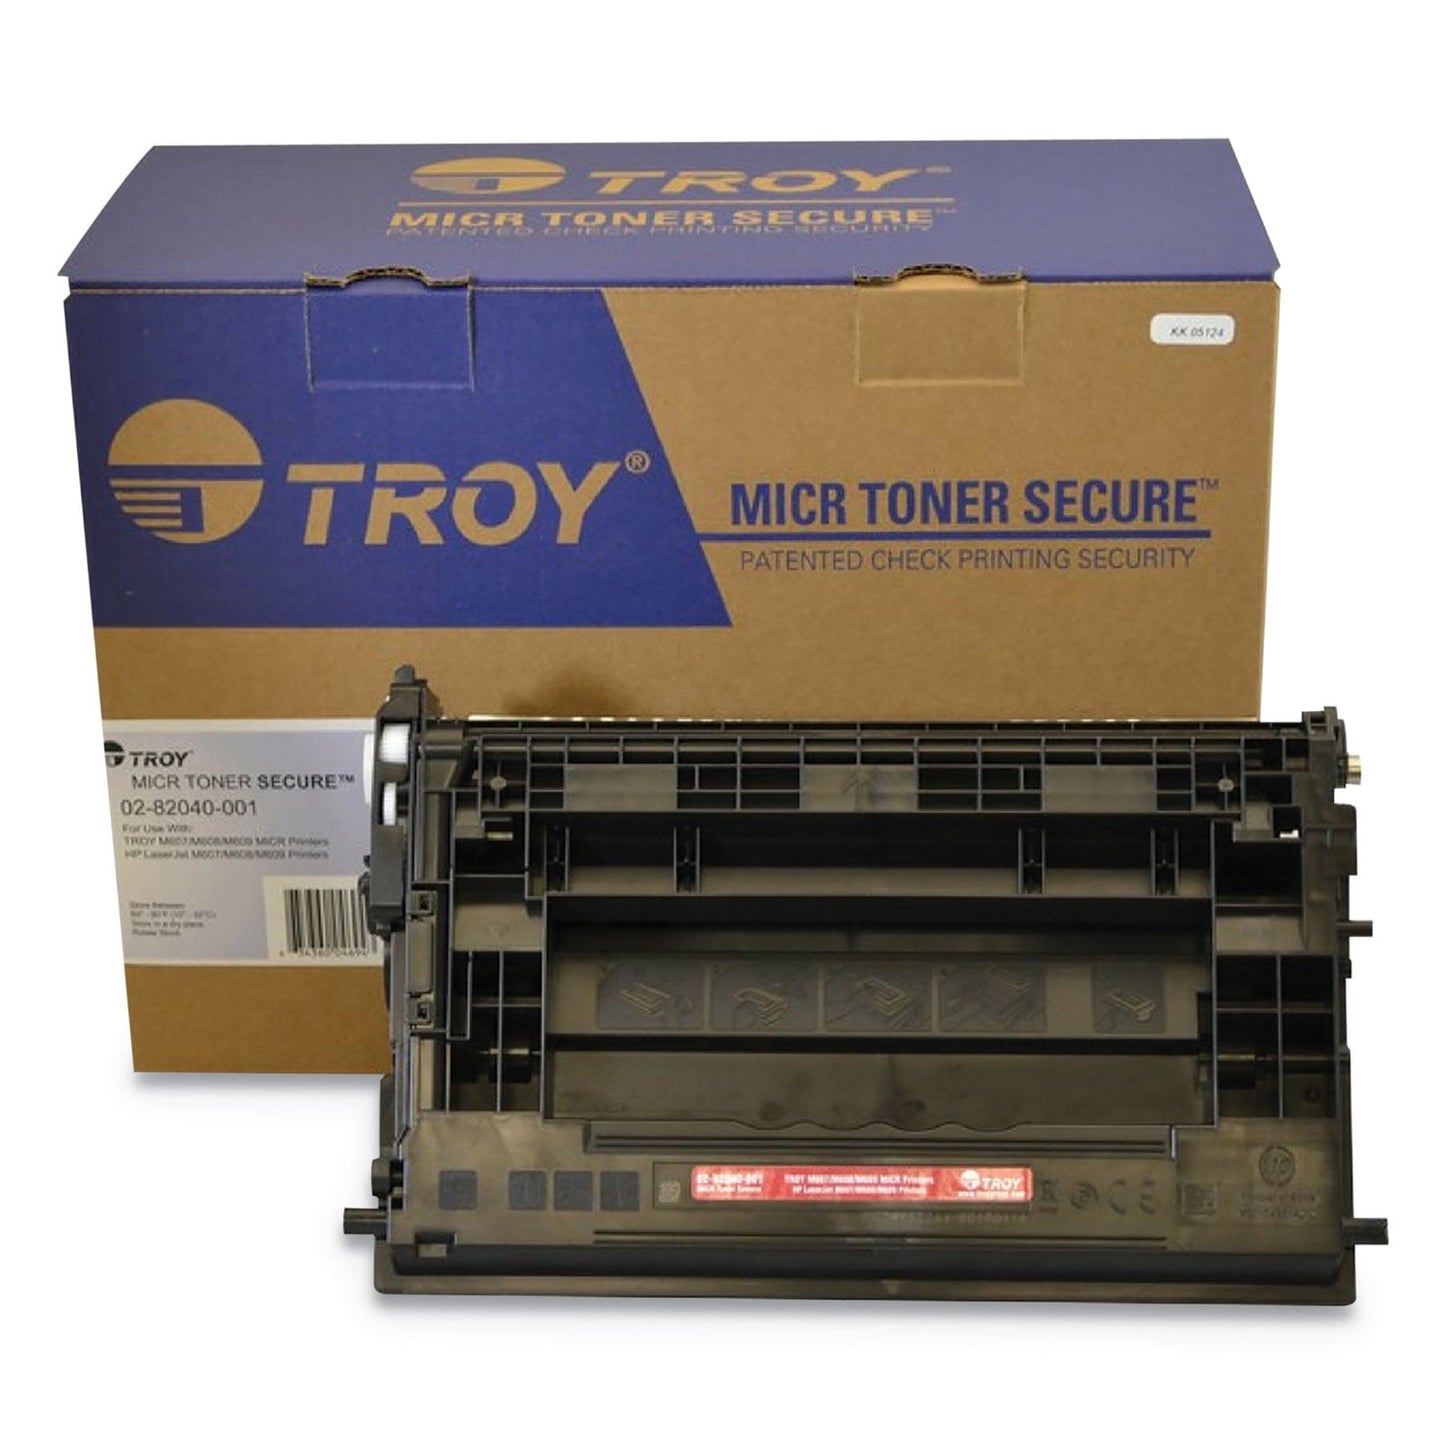 Troy Group HP 37A/CF237A Black Toner Cartridge - 02-82040-001 Used